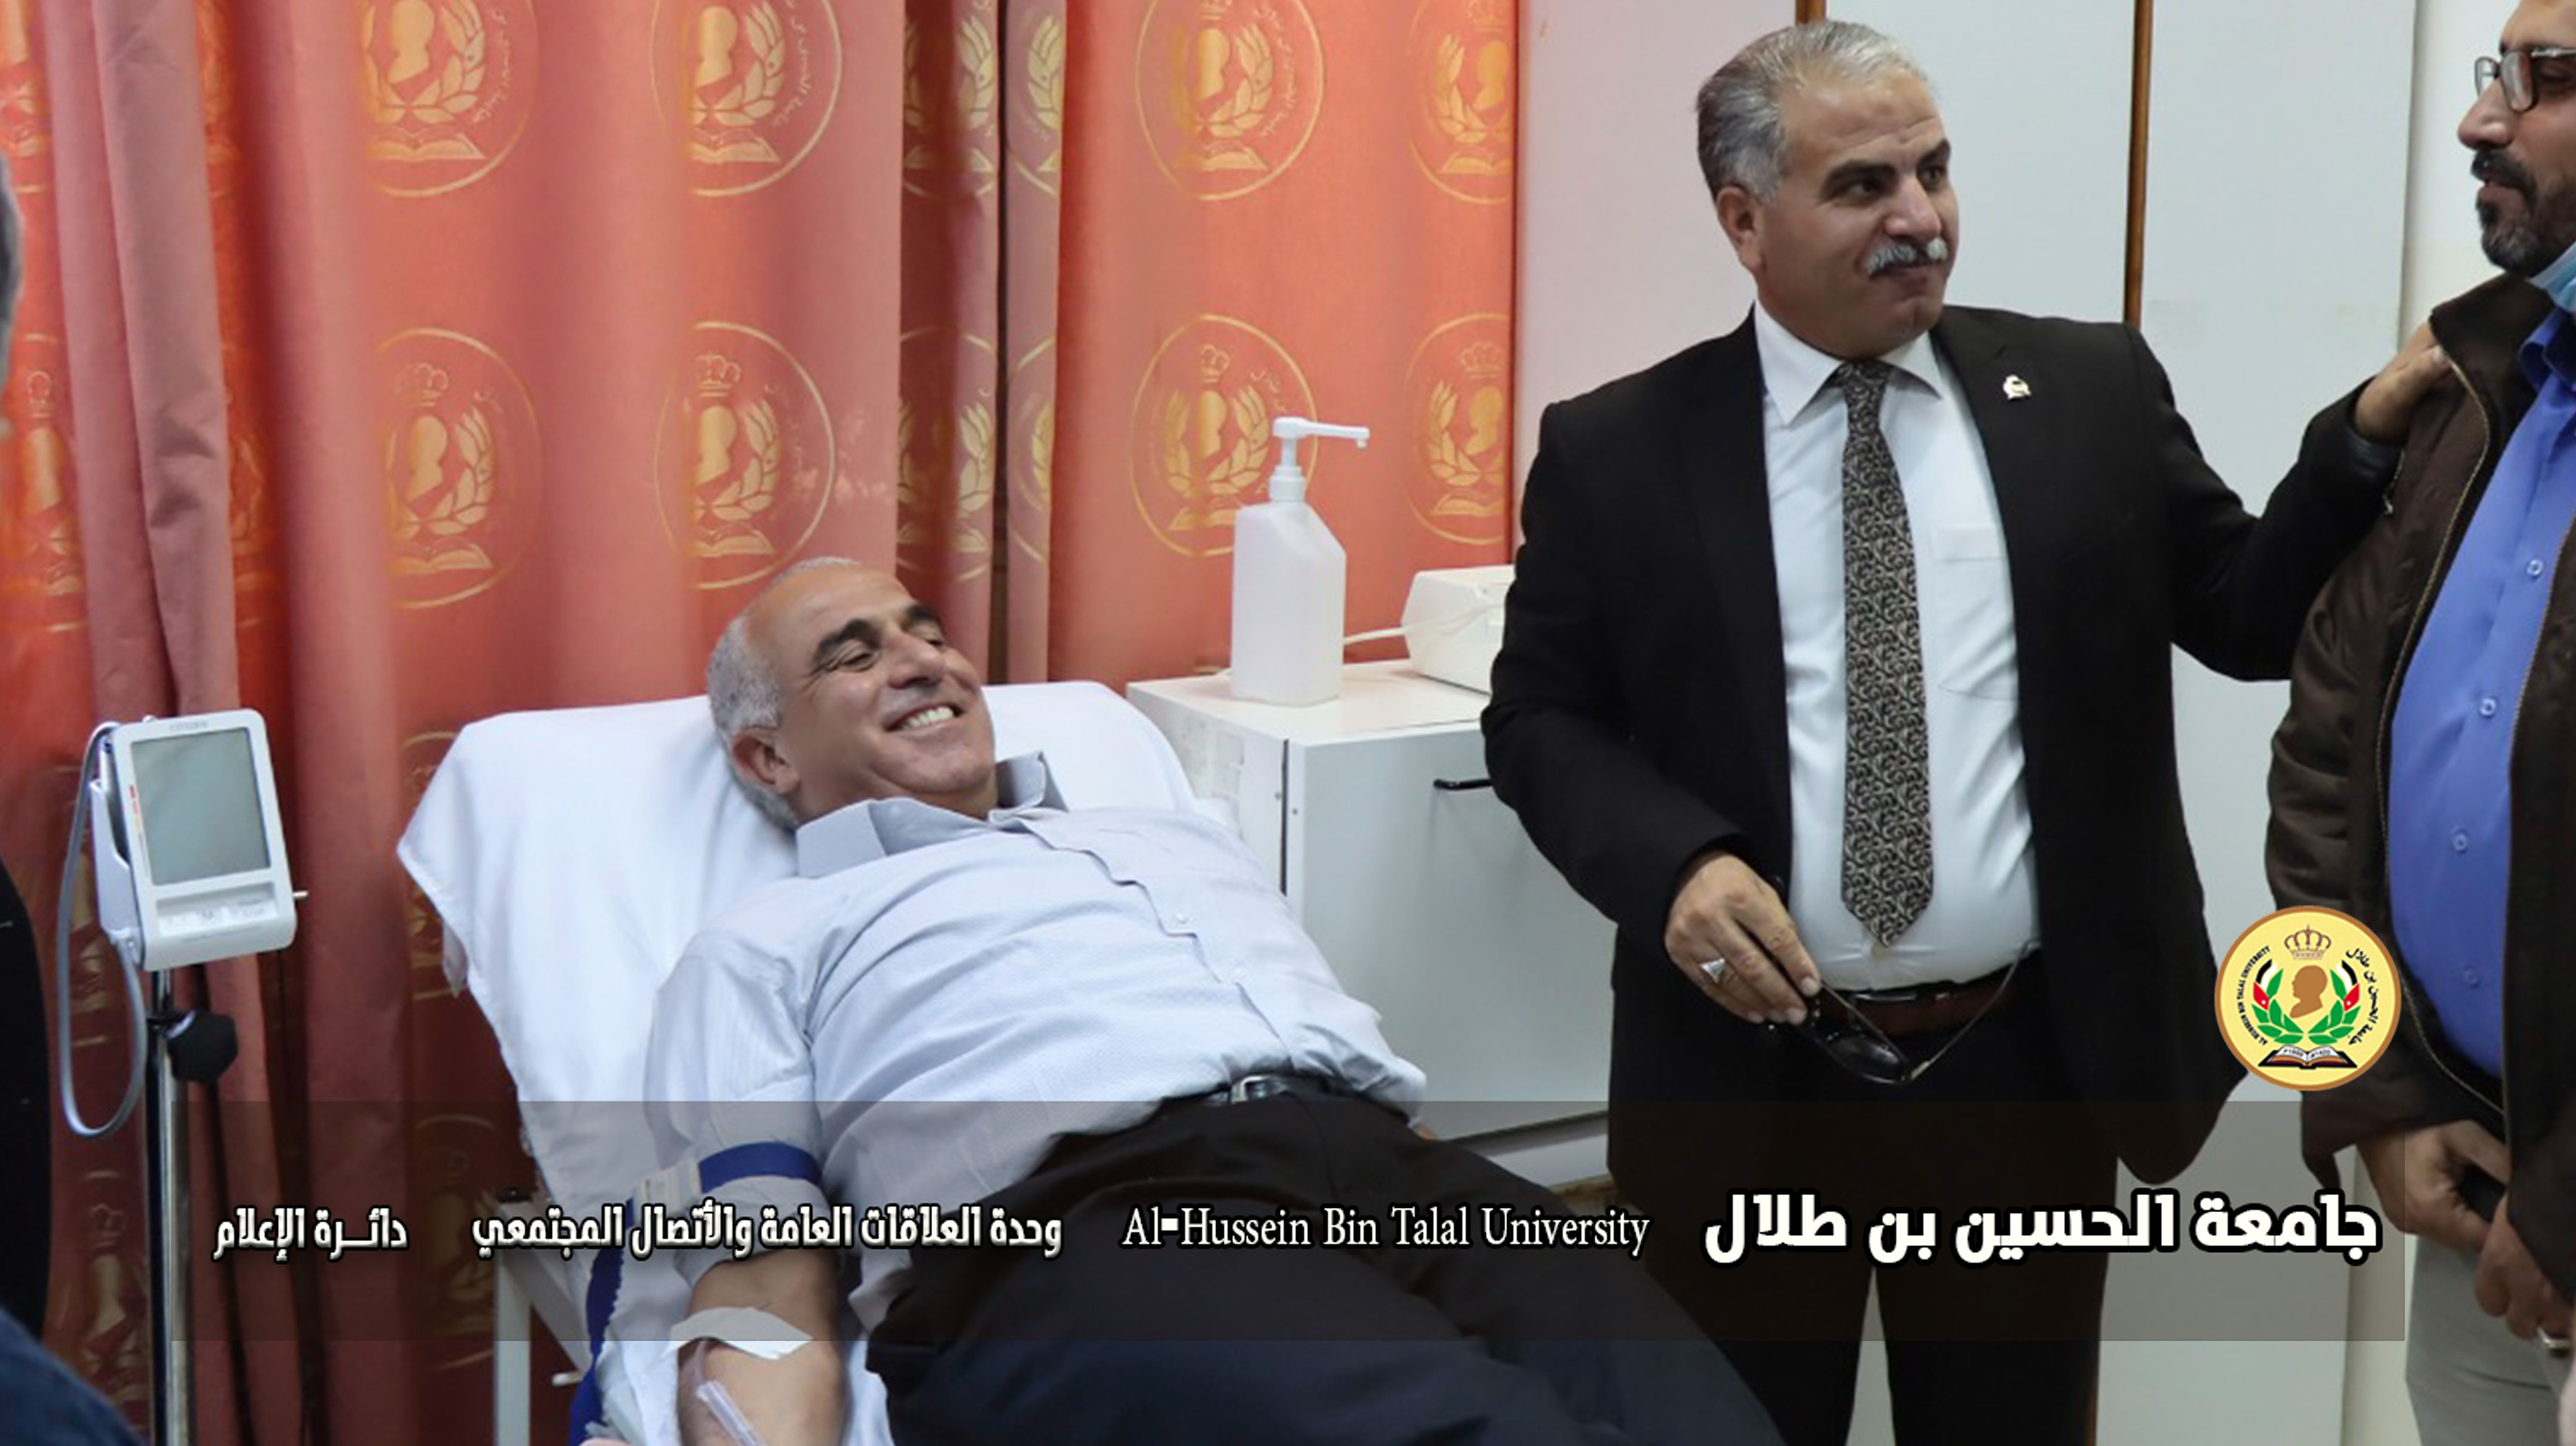 A blood donation campaign at Al-Hussein Bin Talal University